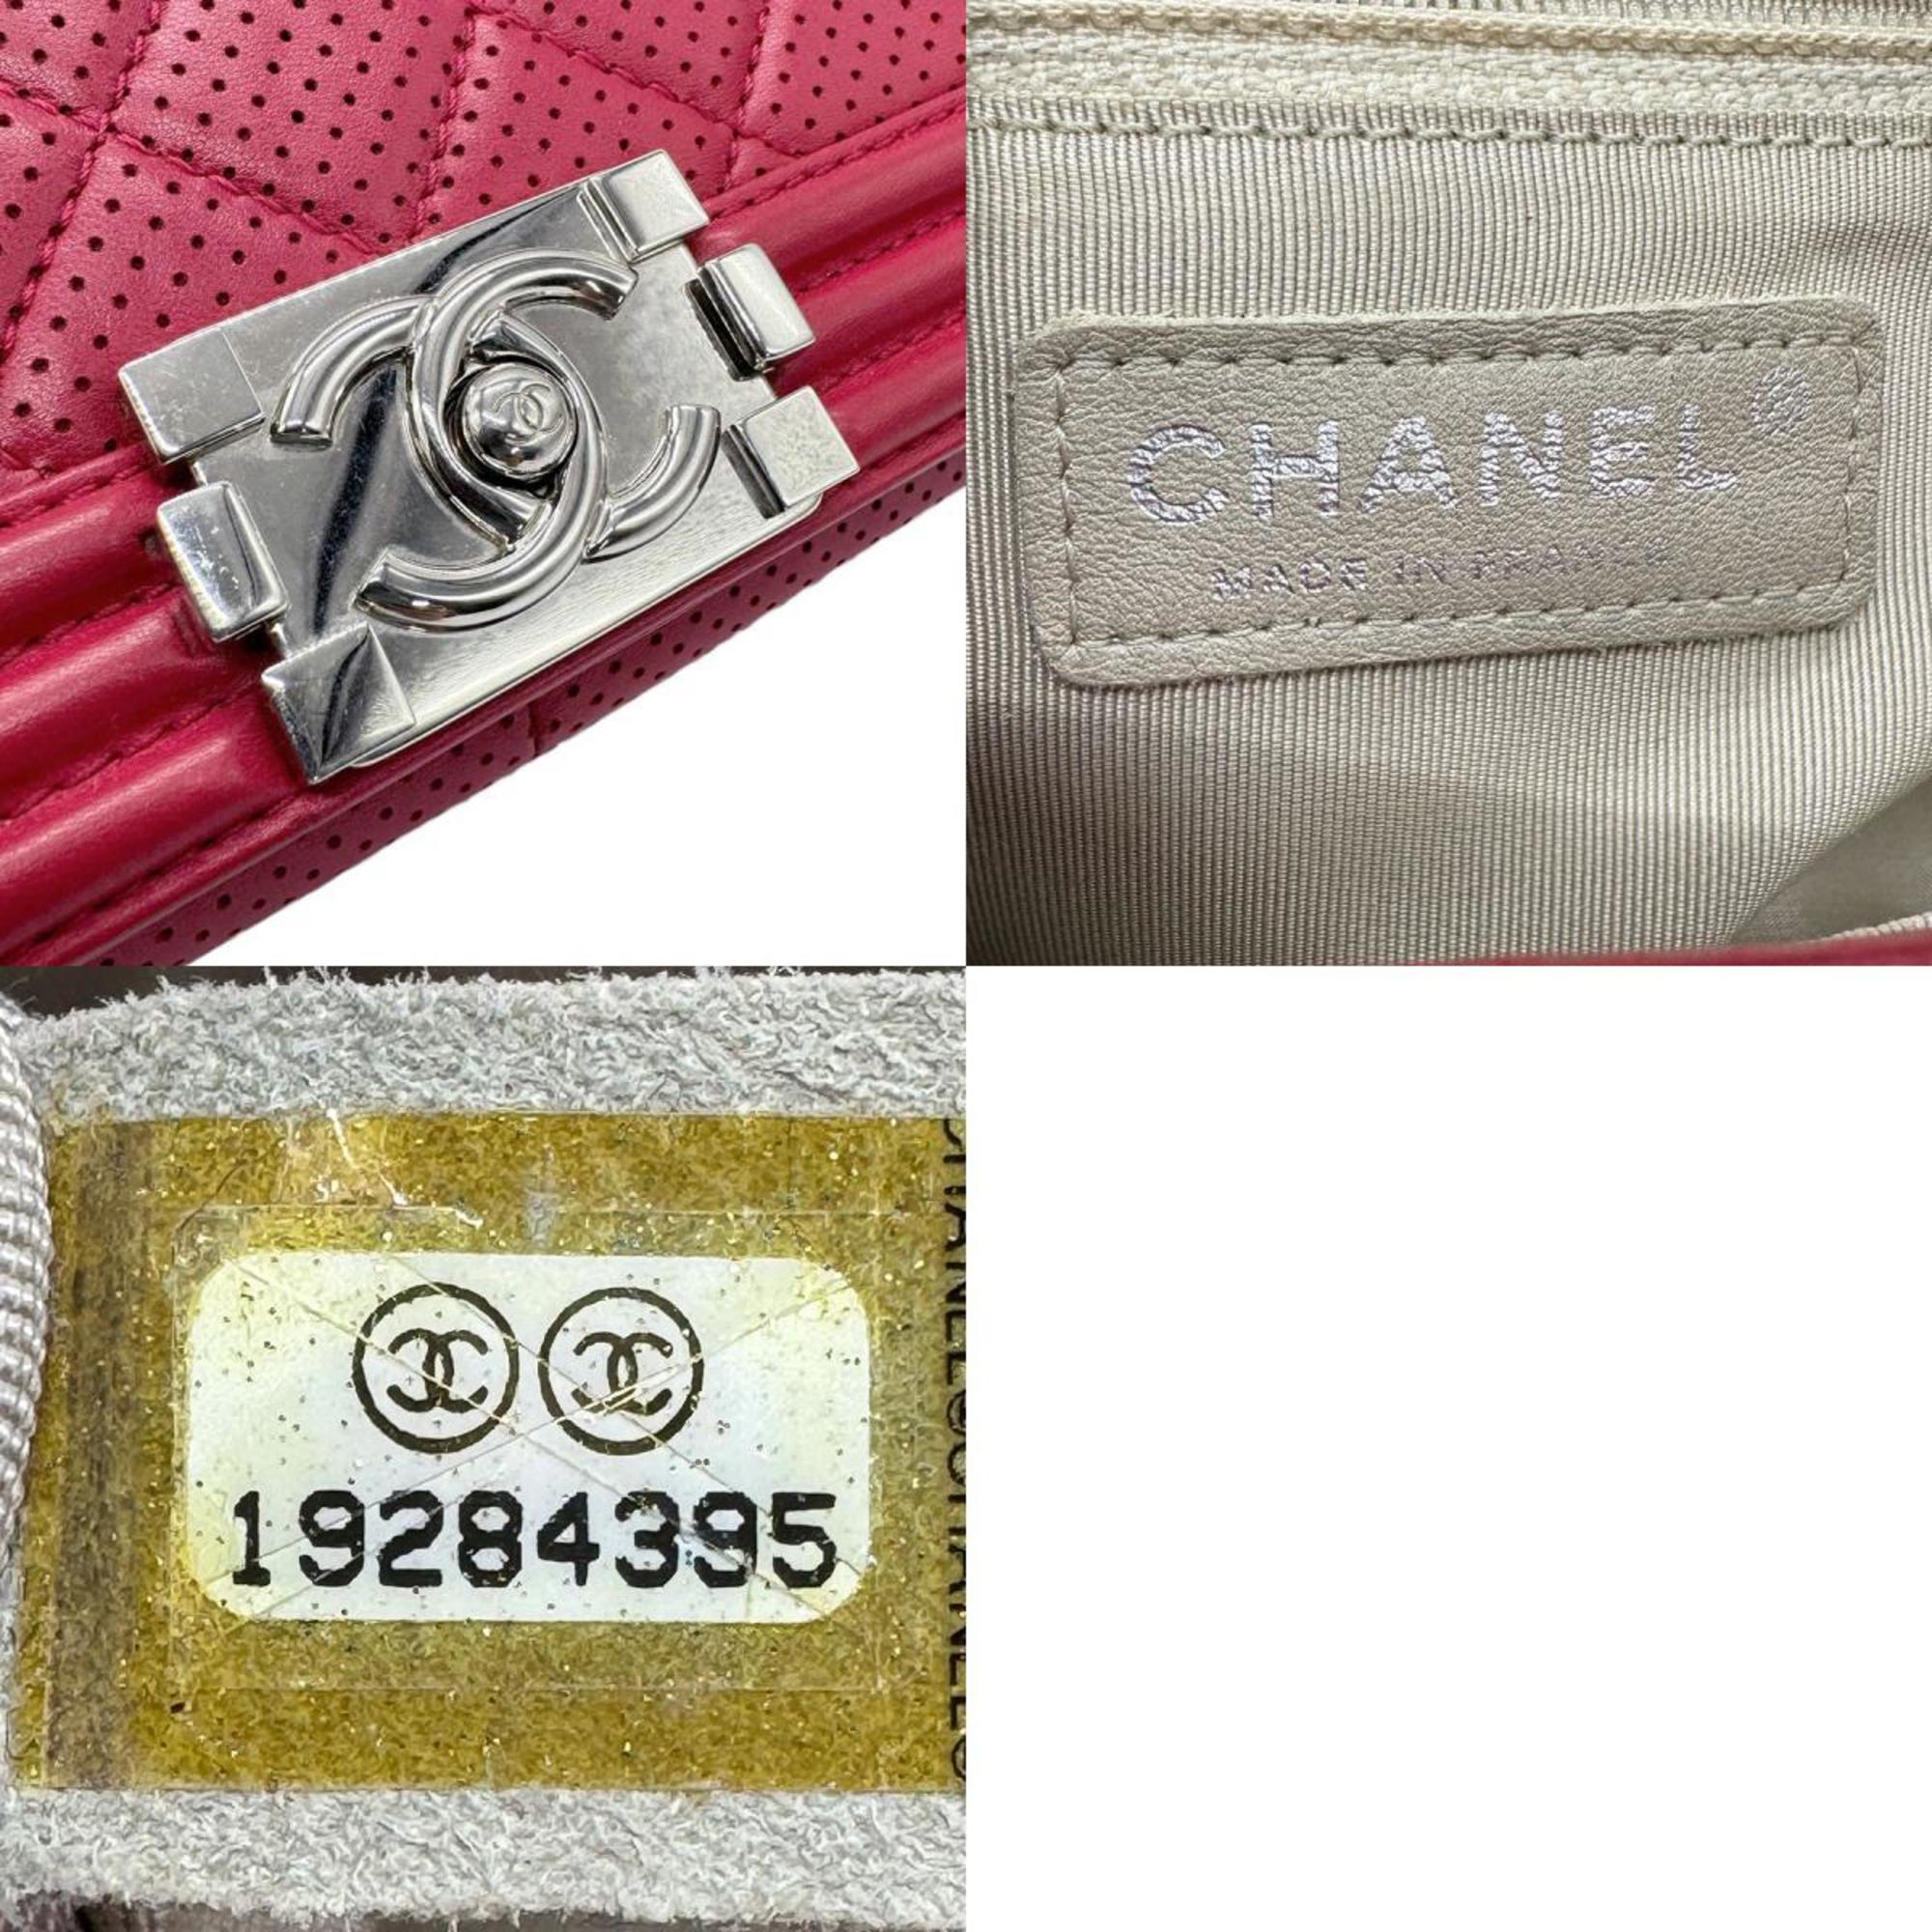 CHANEL Shoulder Bag Chain Boy Chanel Leather/Metal Red/Silver Women's z0610